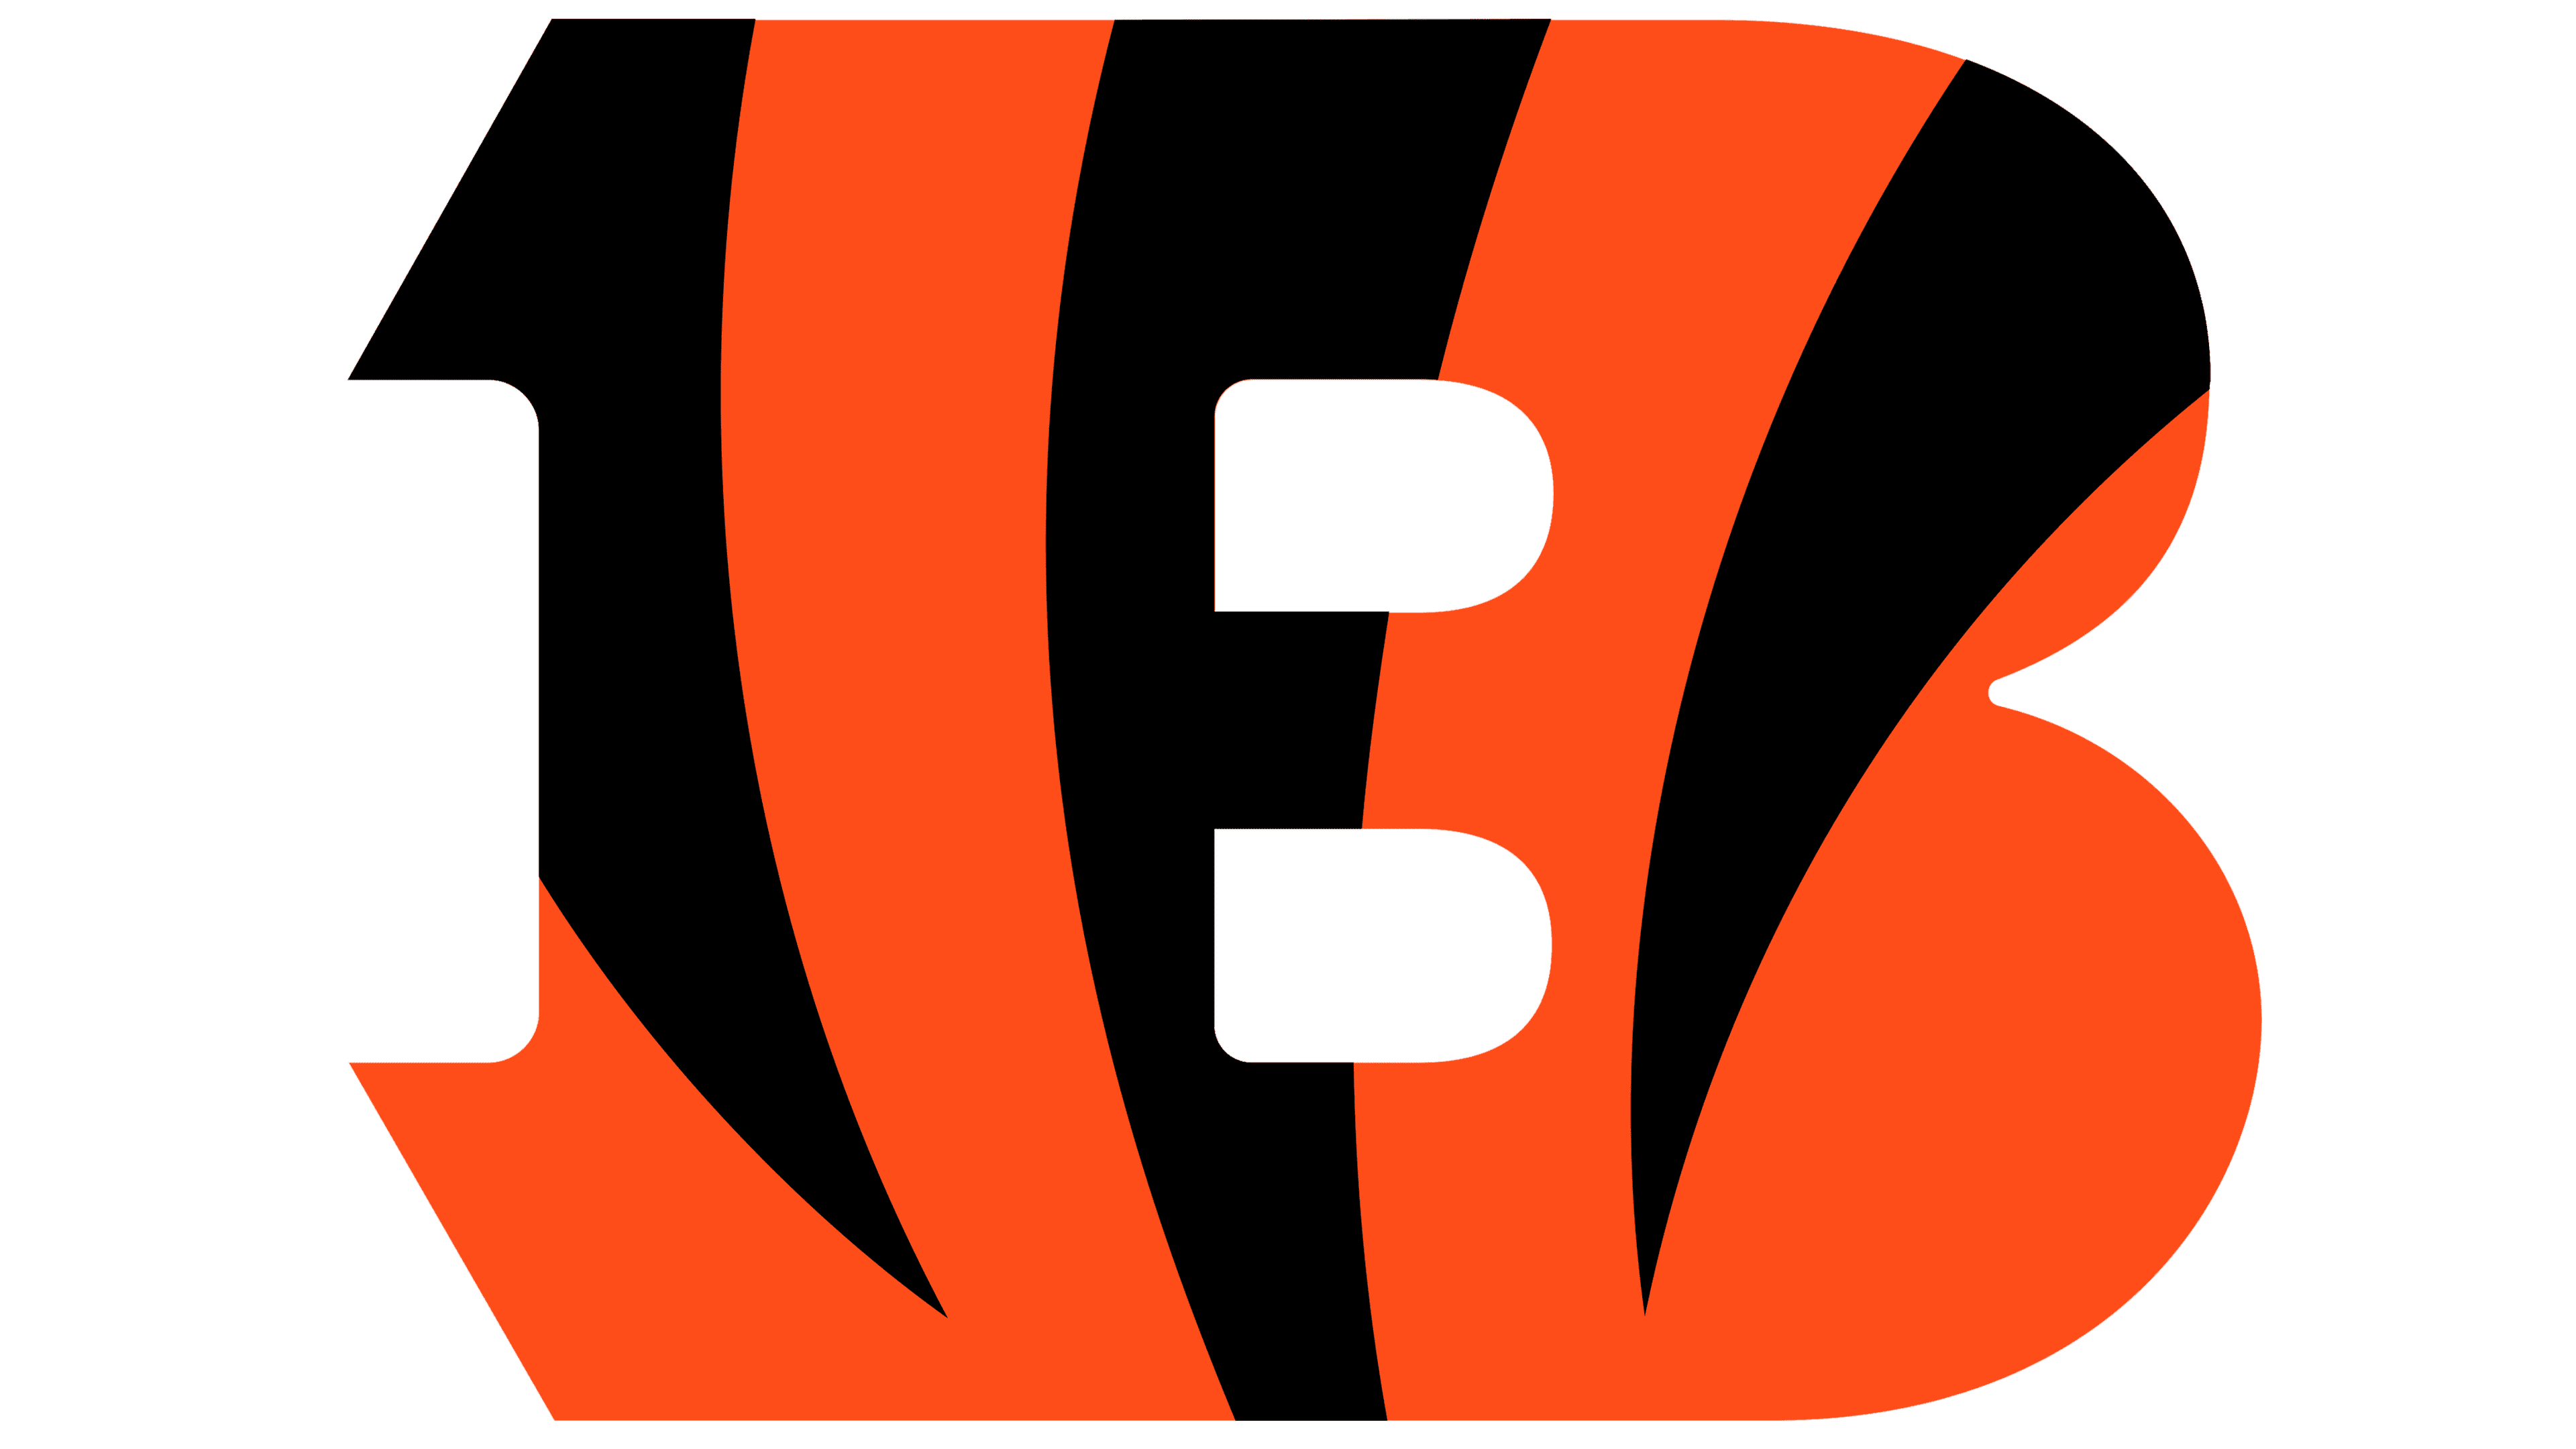 the bengals logo